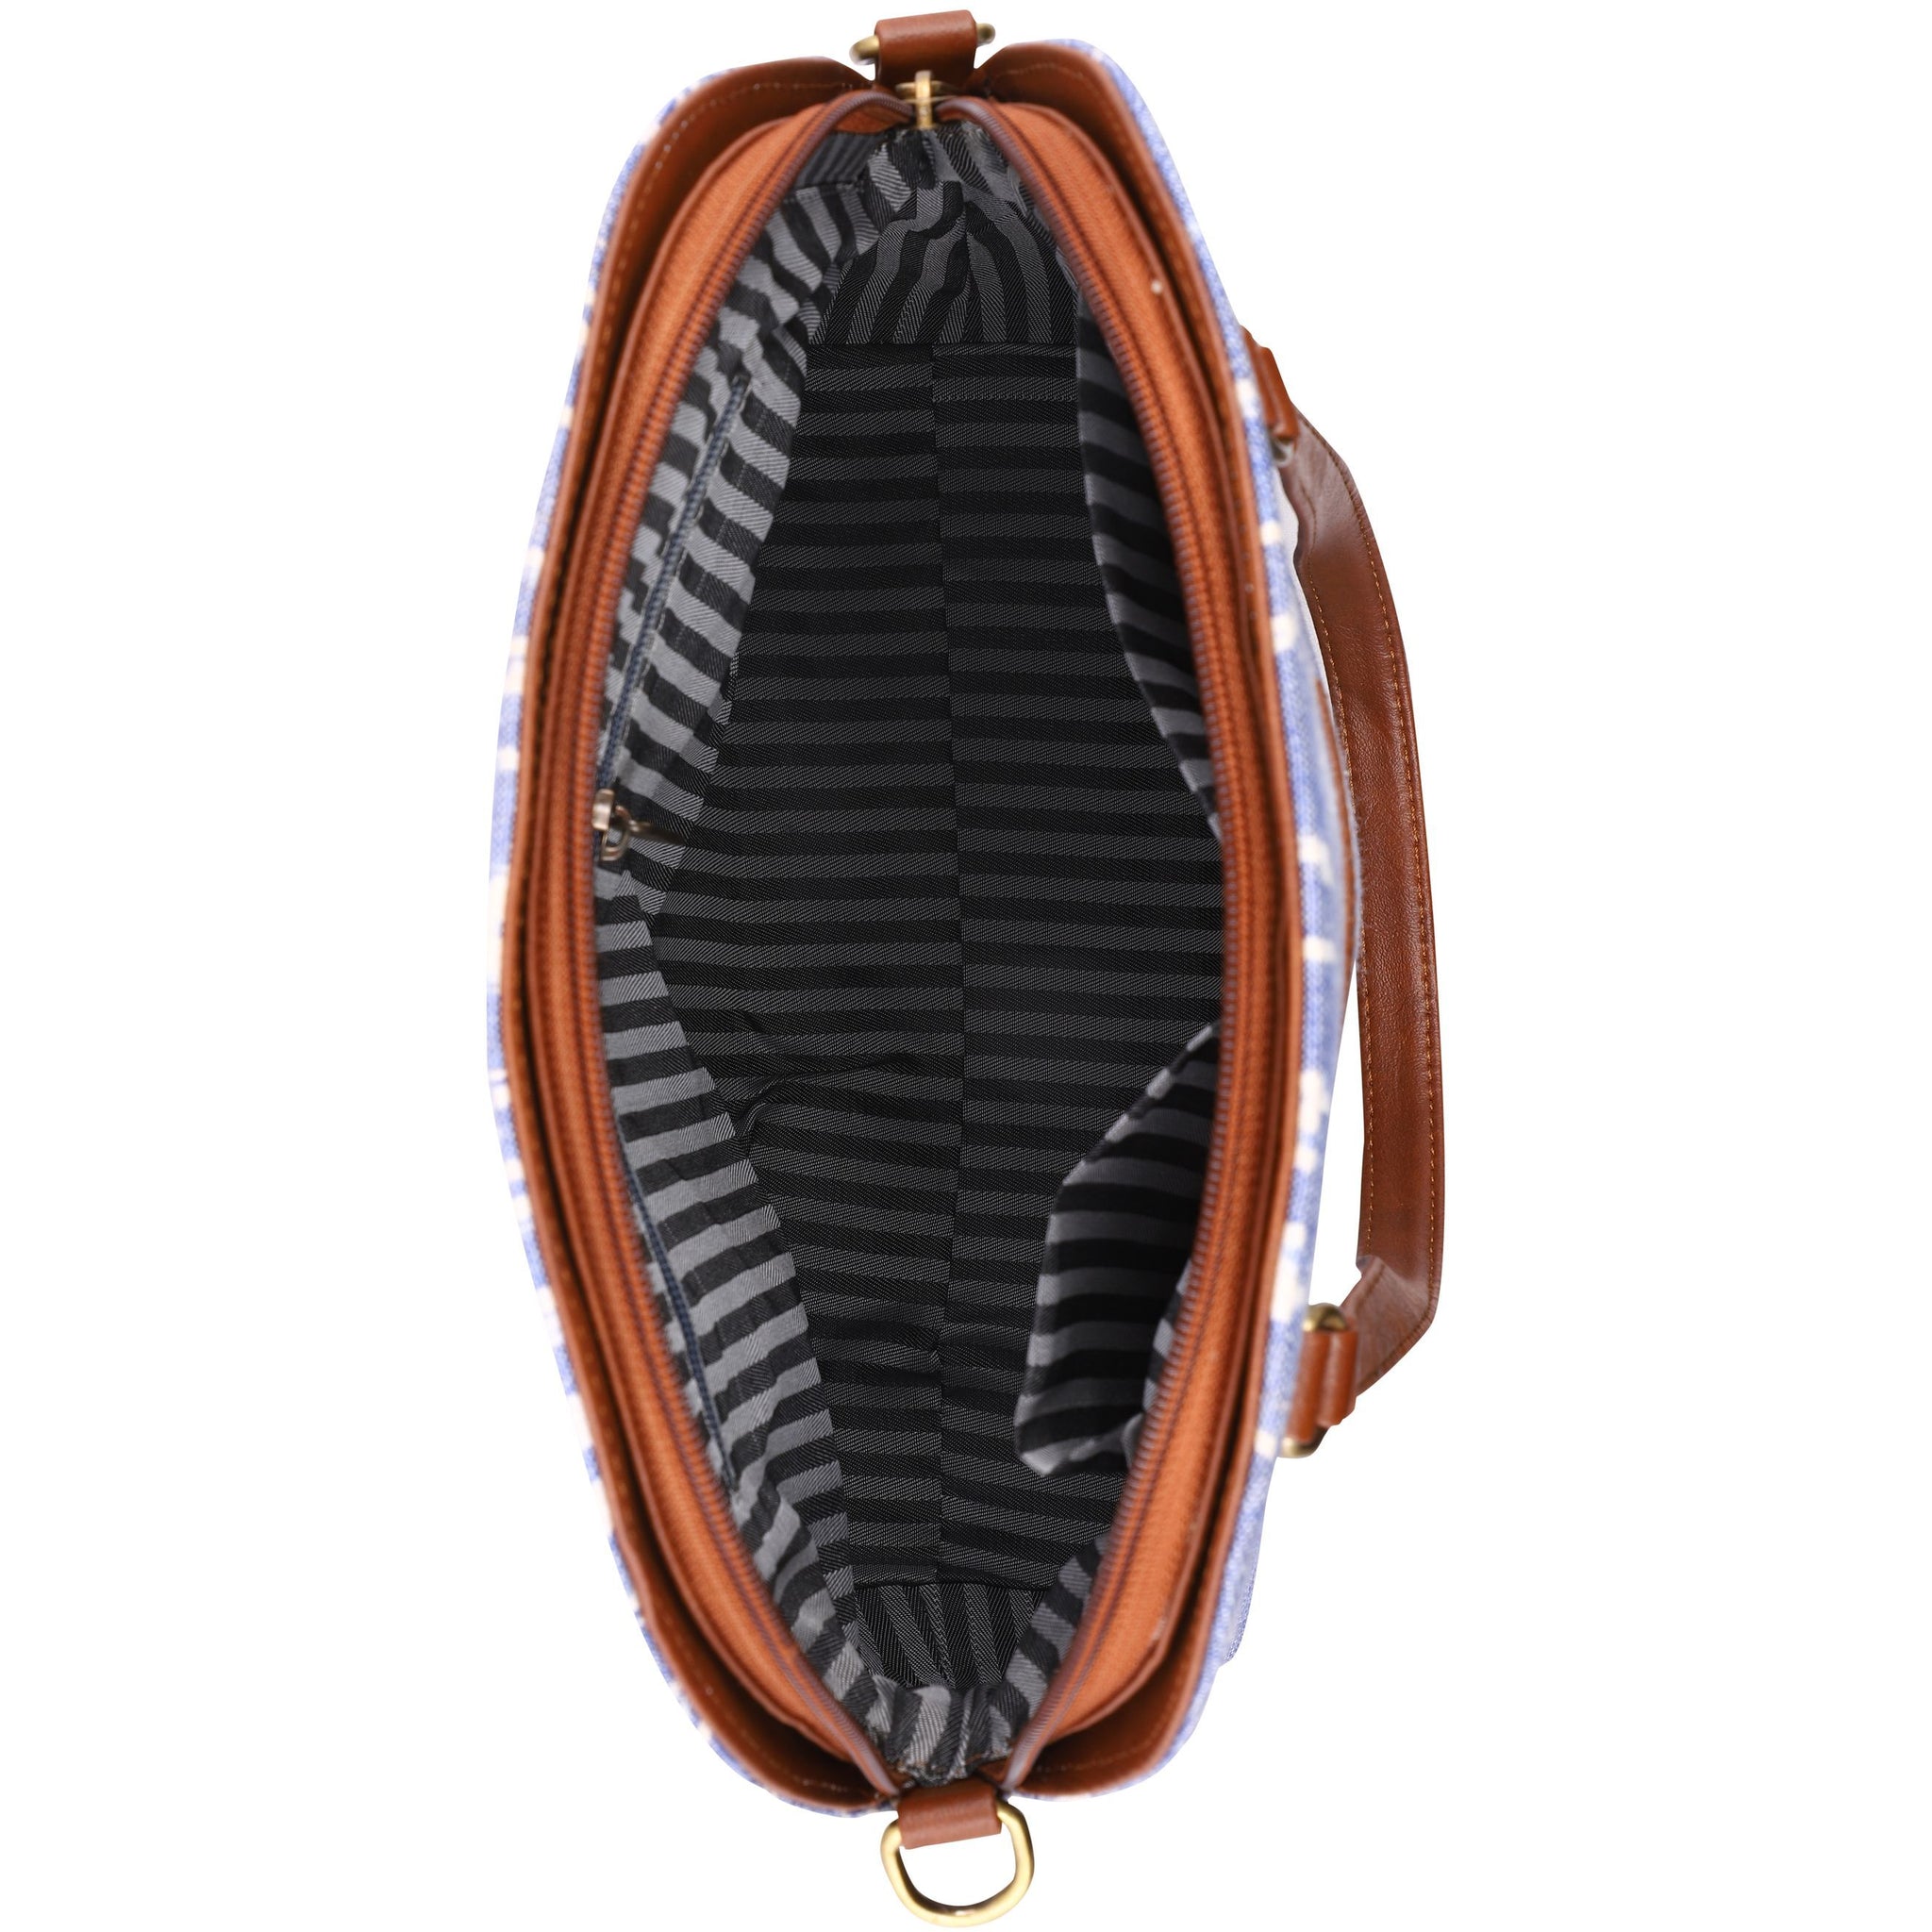 Handwoven ikat vegan leather handbag